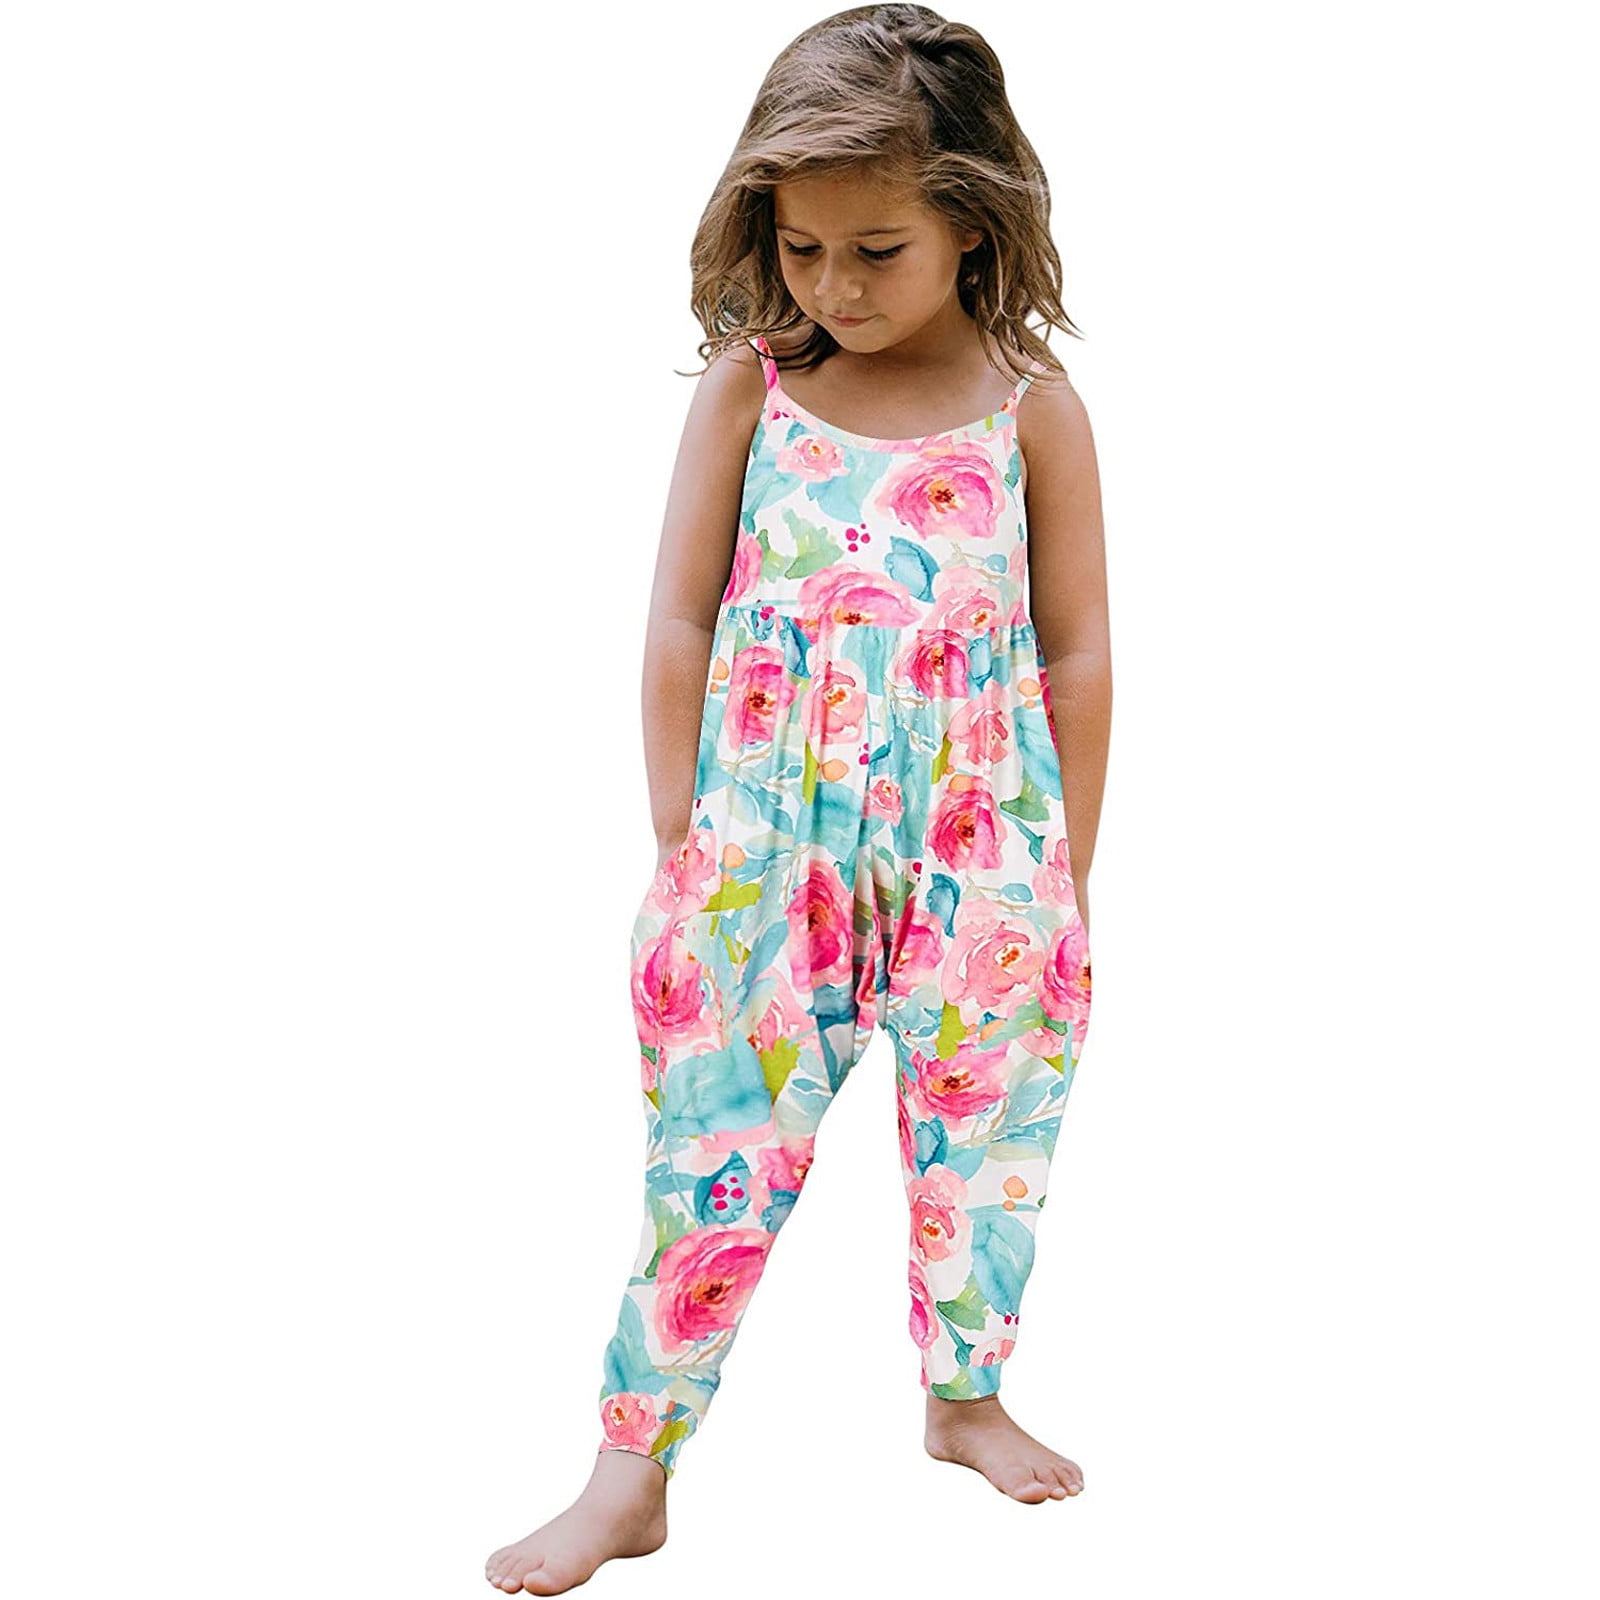 Herrnalise Baby Summer Jumpsuits for Girls Kids Cute Backless Harem Strap  Romper Jumpsuit Toddler Pants Size 1-6T 